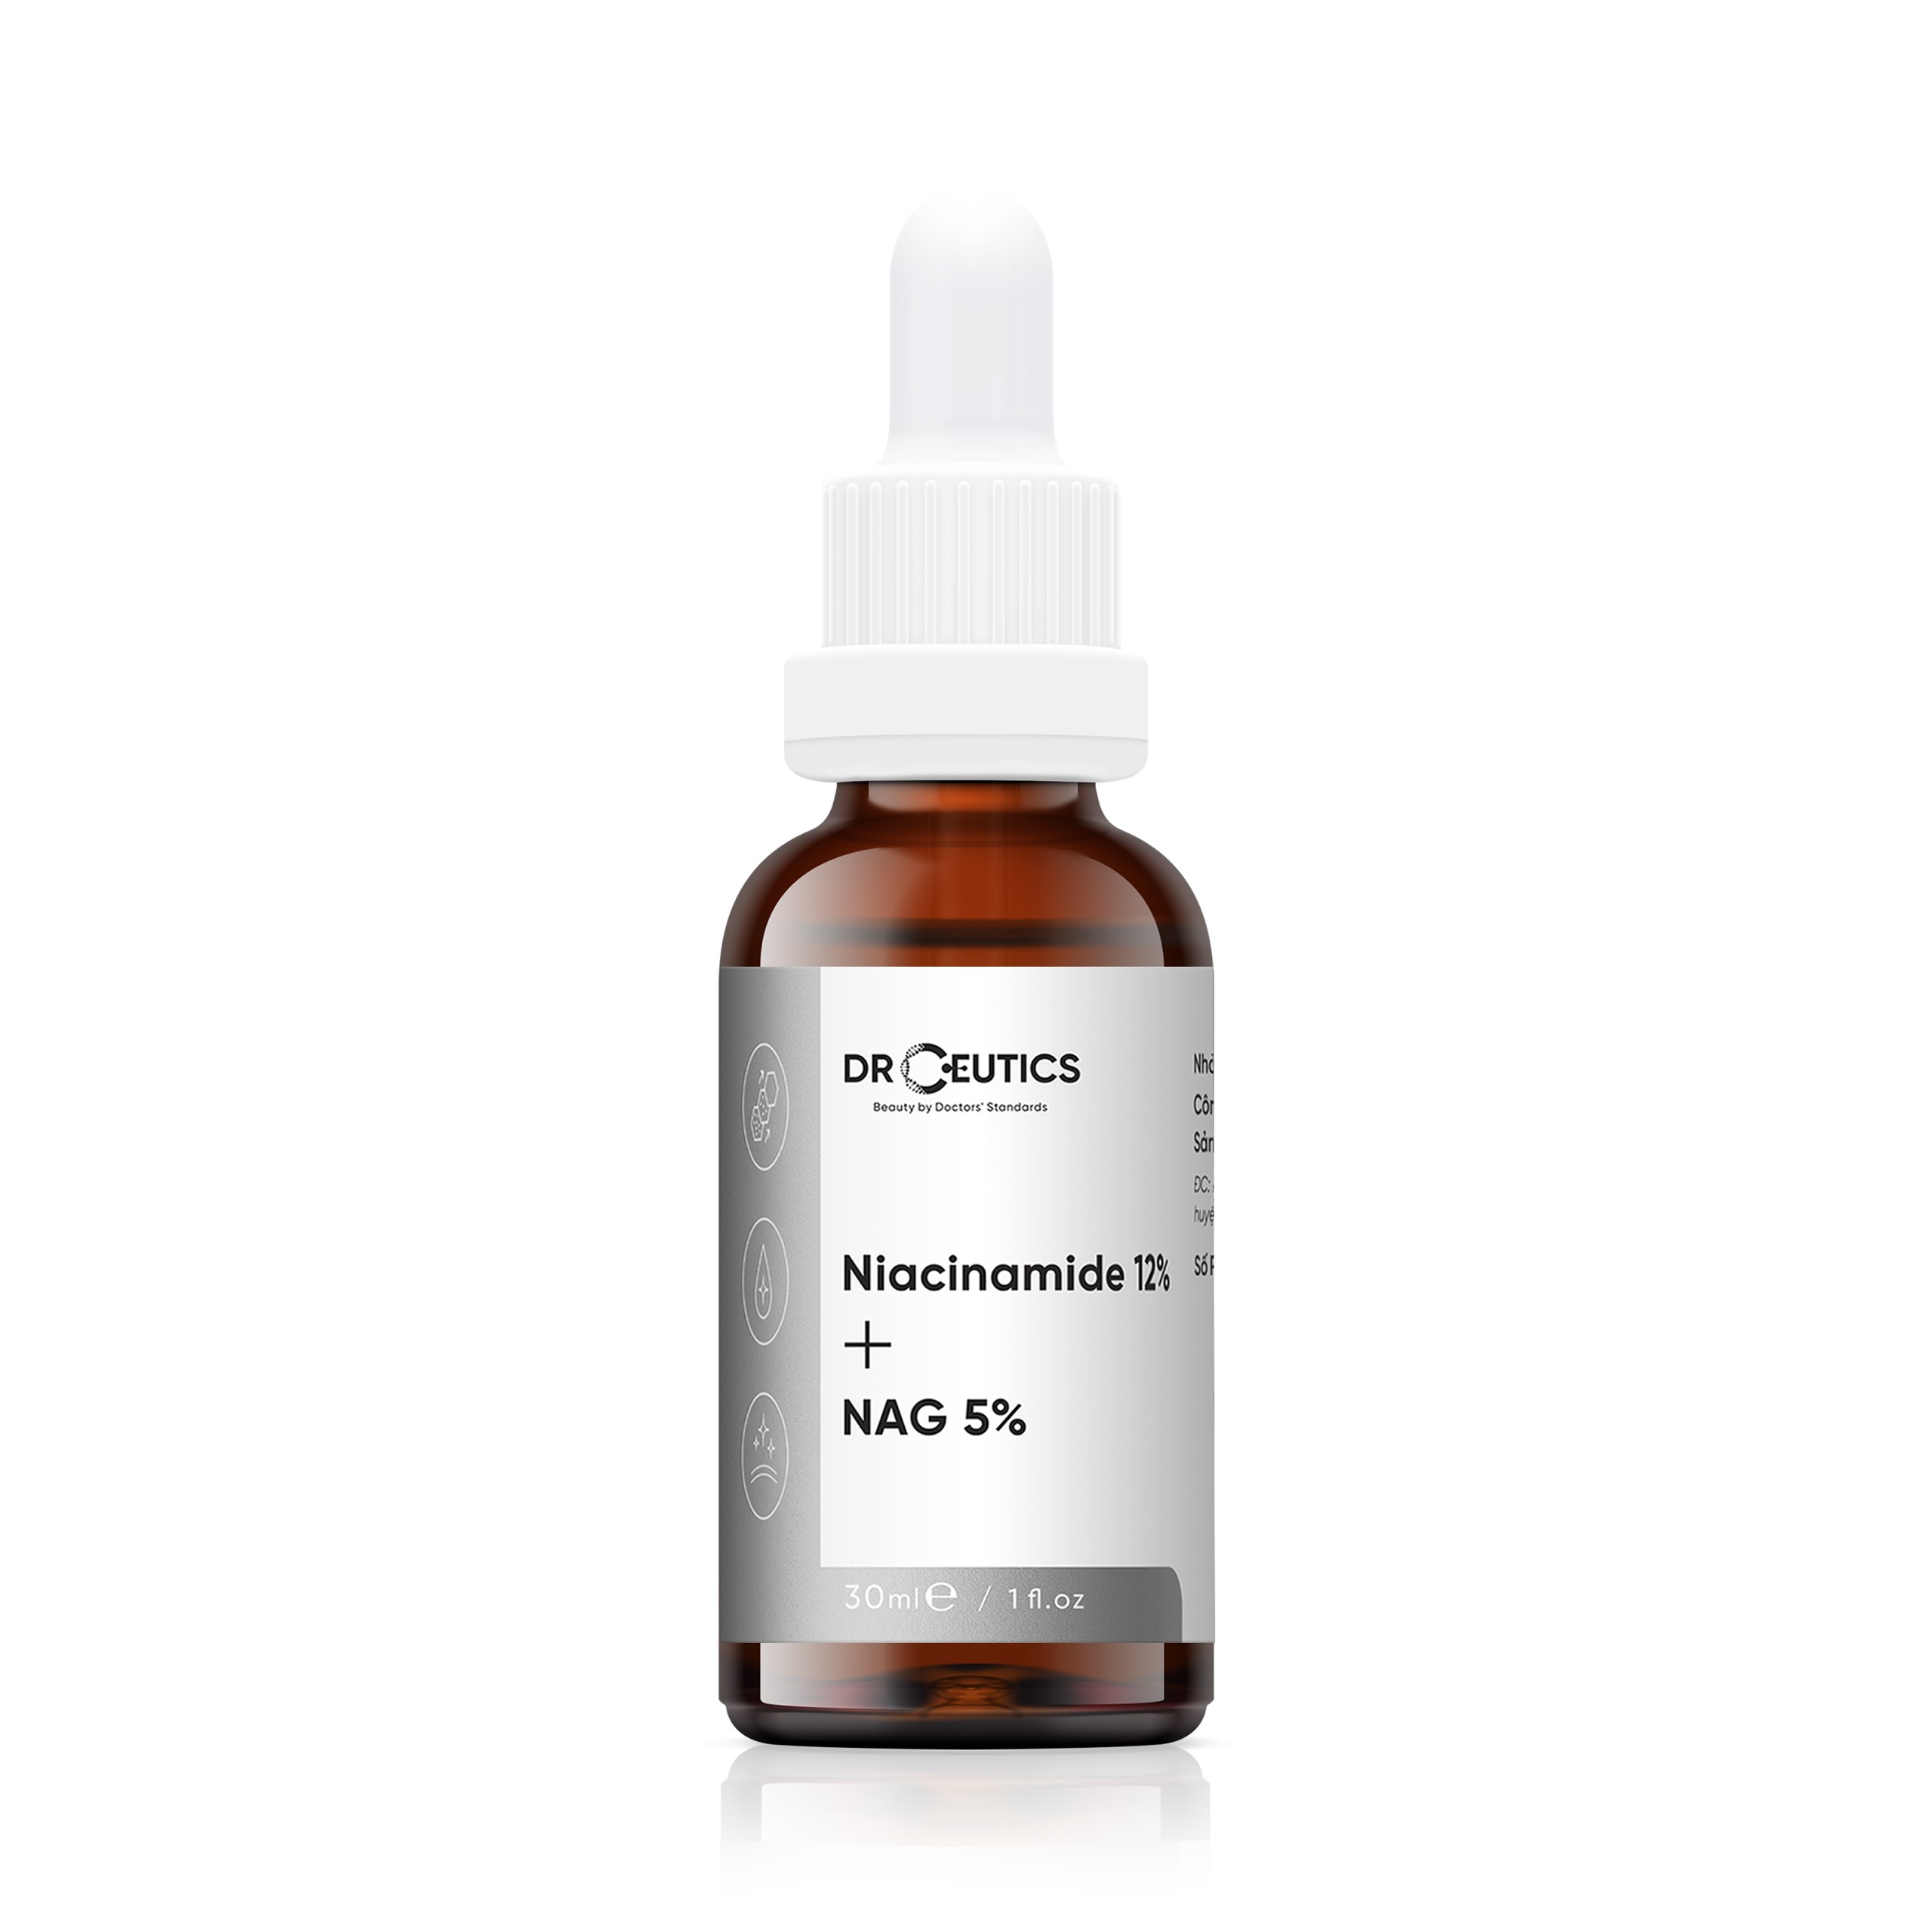  Serum B3 Niacinamide 12%+ NAG 5% Drceutics 